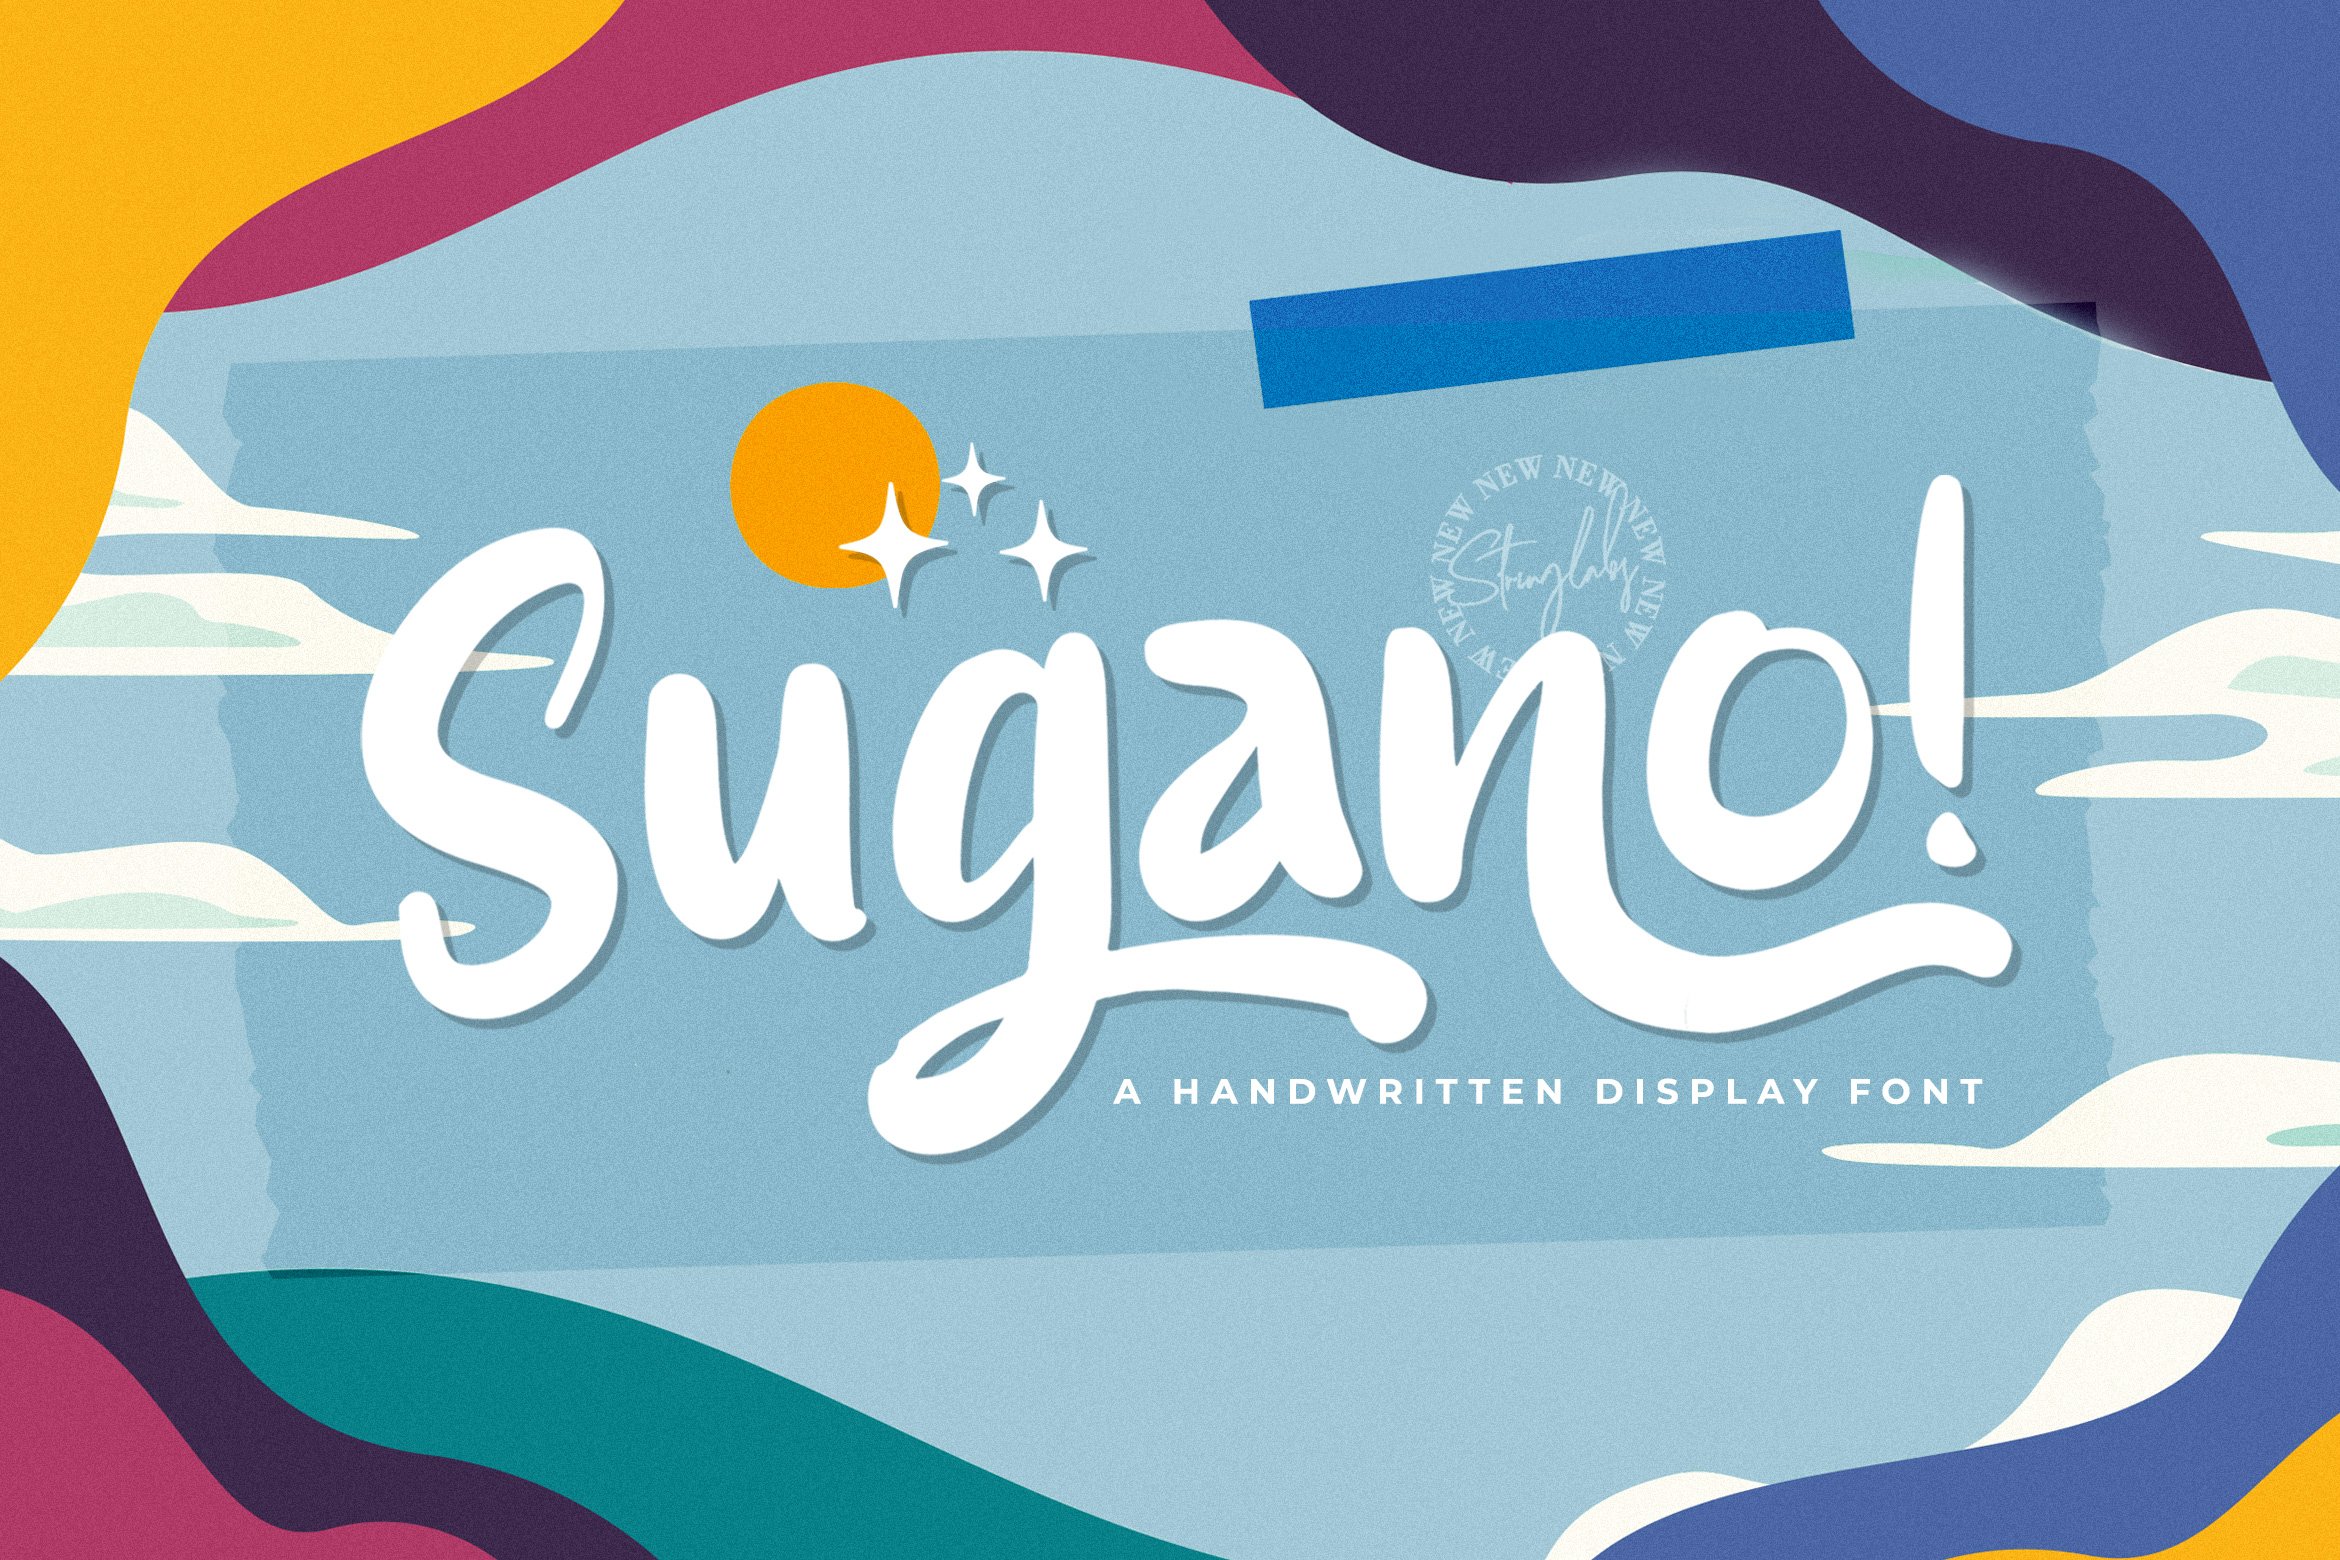 Sugano - Handwritten Font cover image.